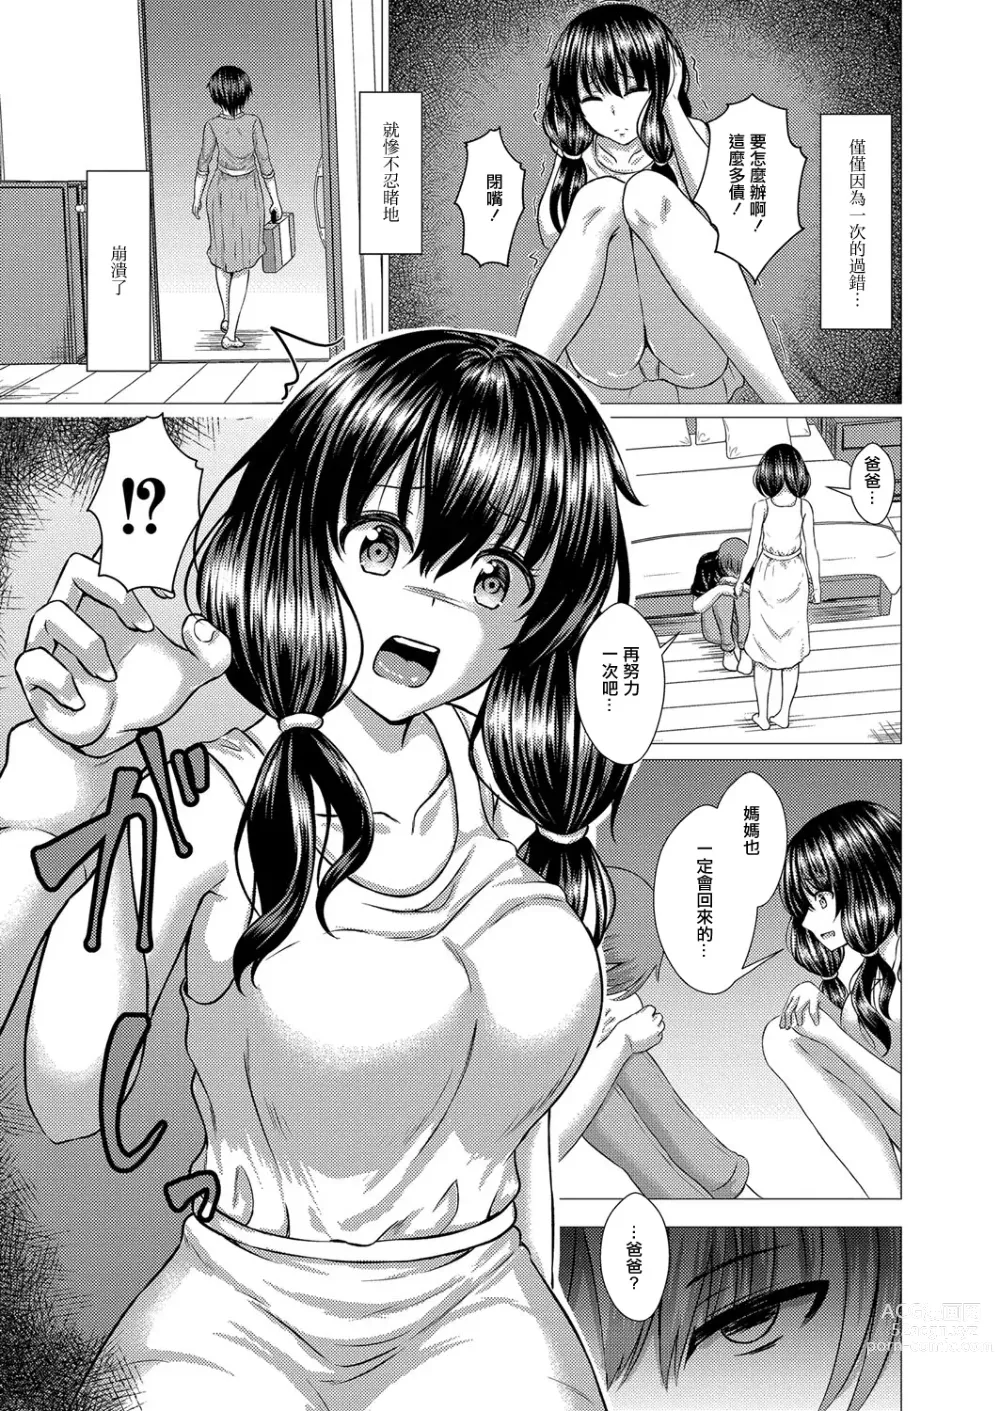 Page 7 of manga Kinshinjyoai